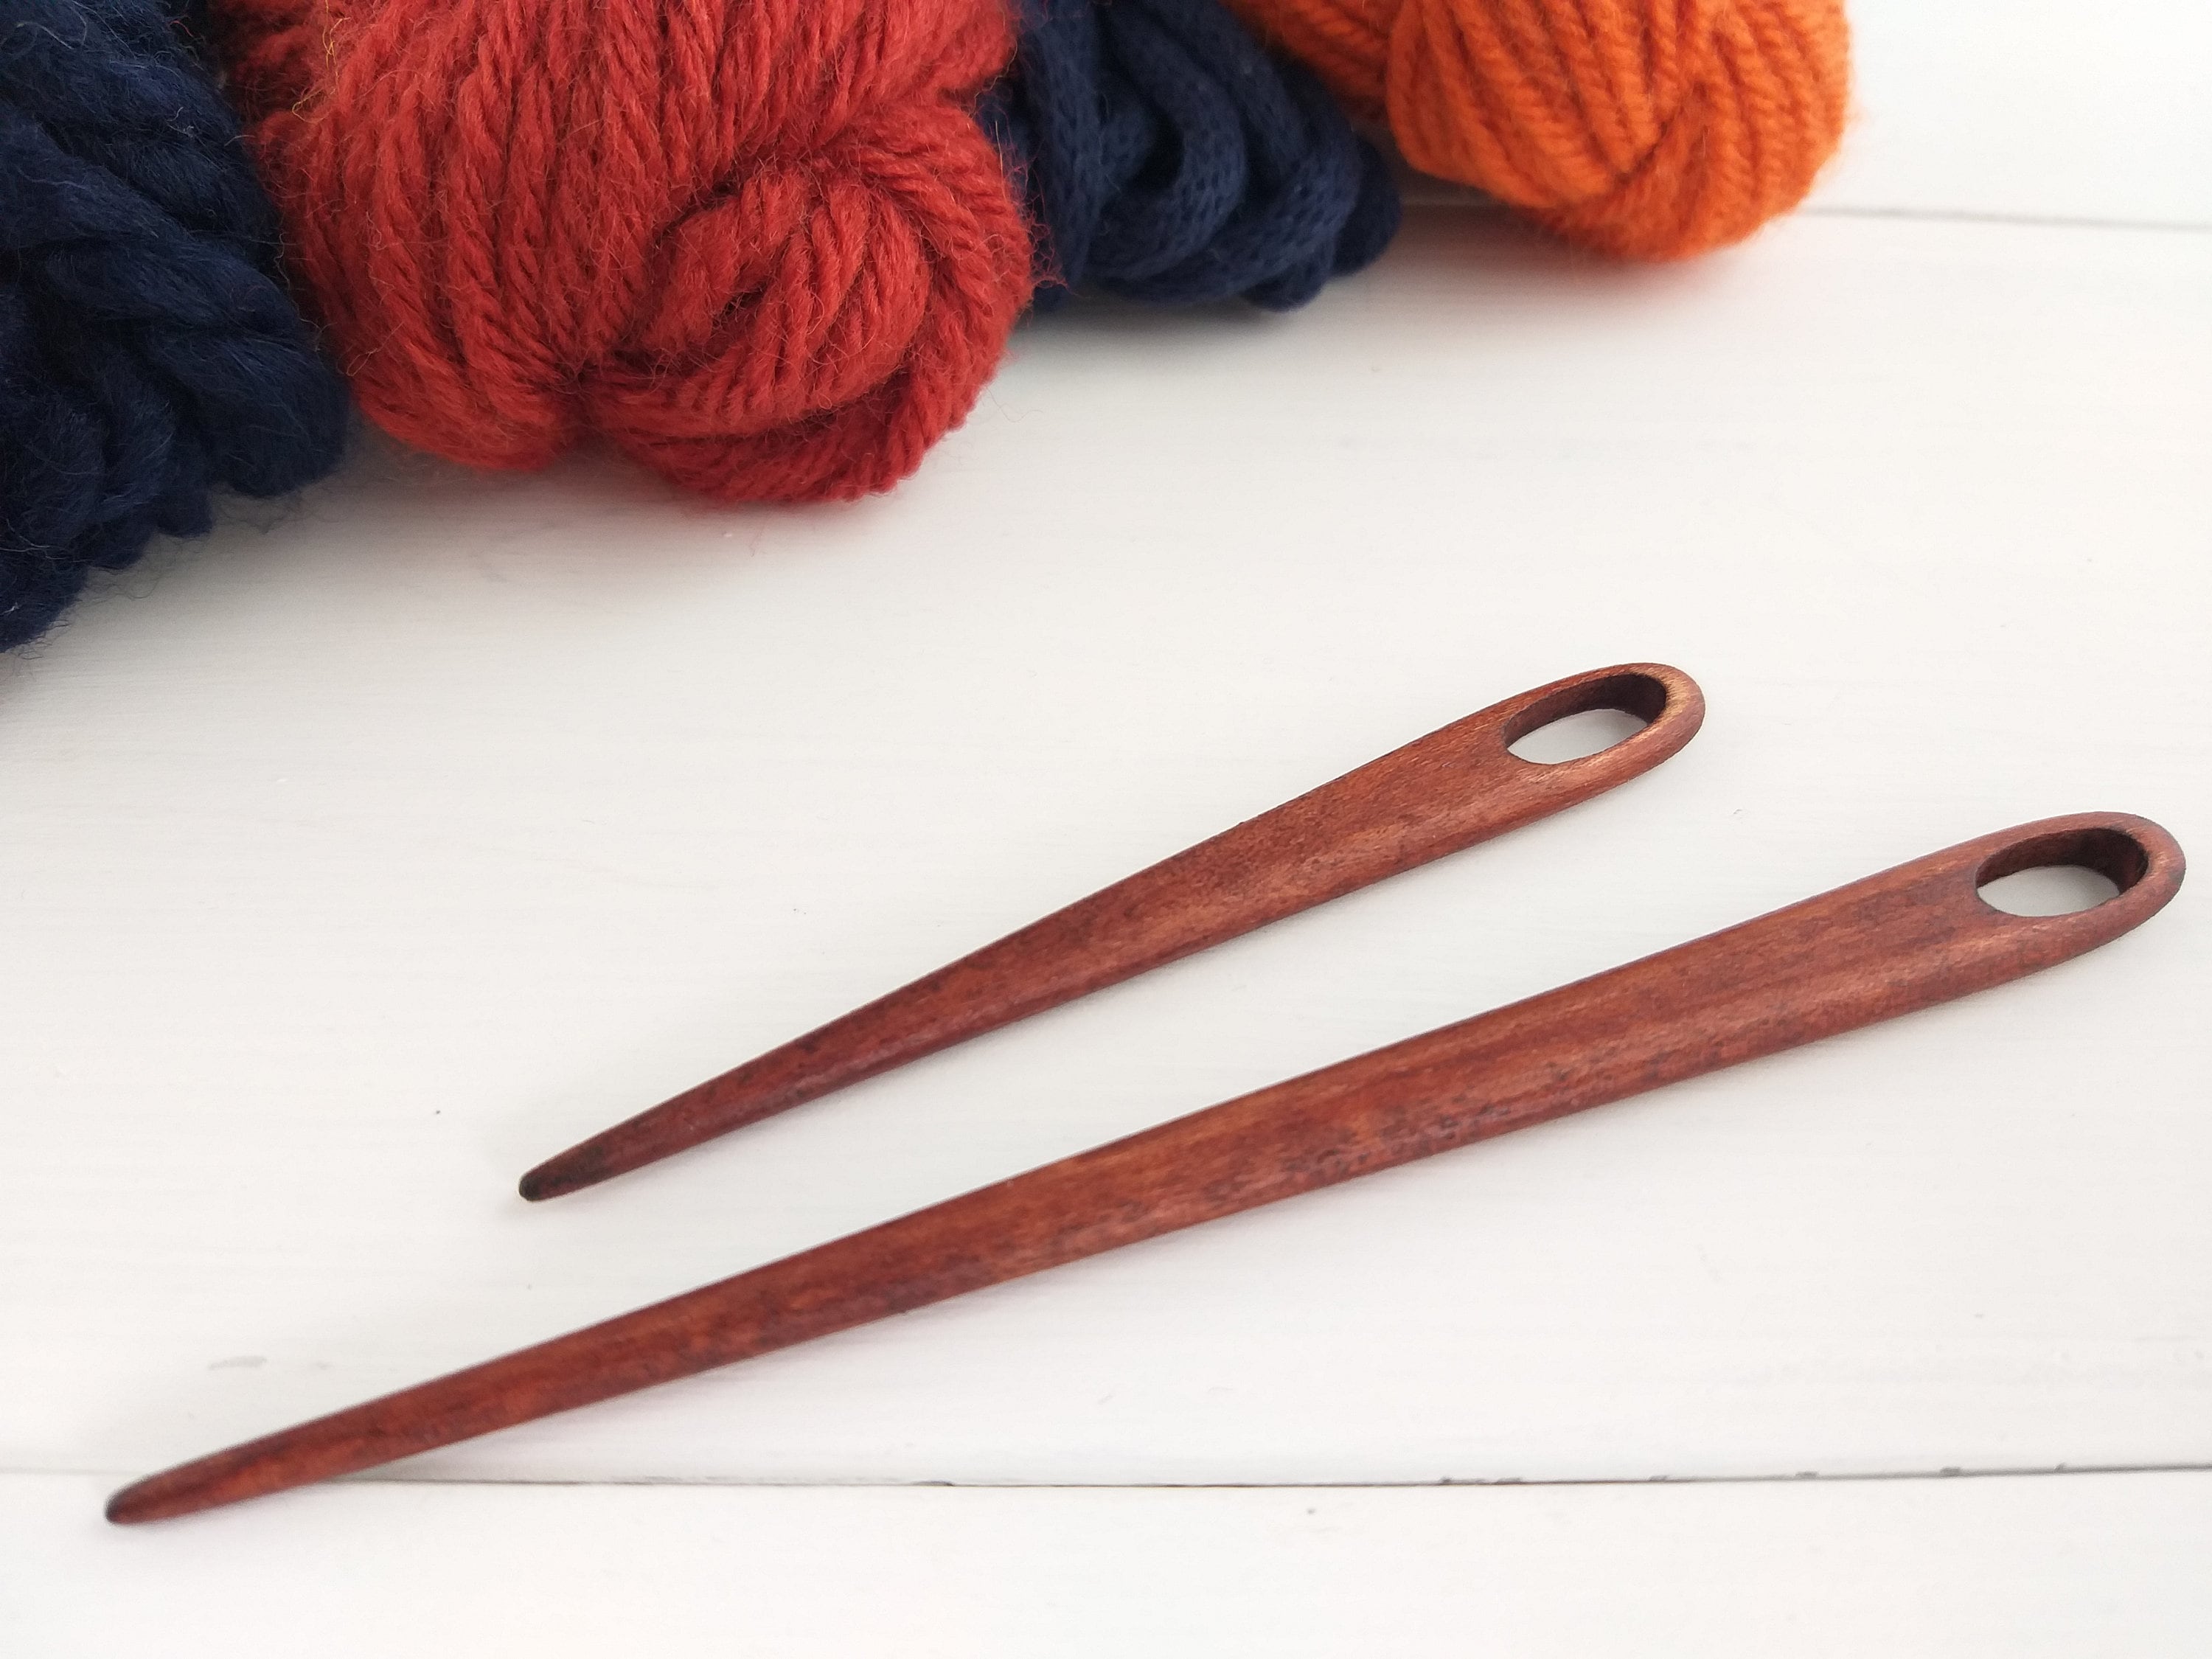  KOSDFOGE Yarn Needle, 20Pcs Silver Large Round Eye Knitter  Needles for Sewing Embroidery 52Mm Length, Large Eye Blunt Needles for Yarn